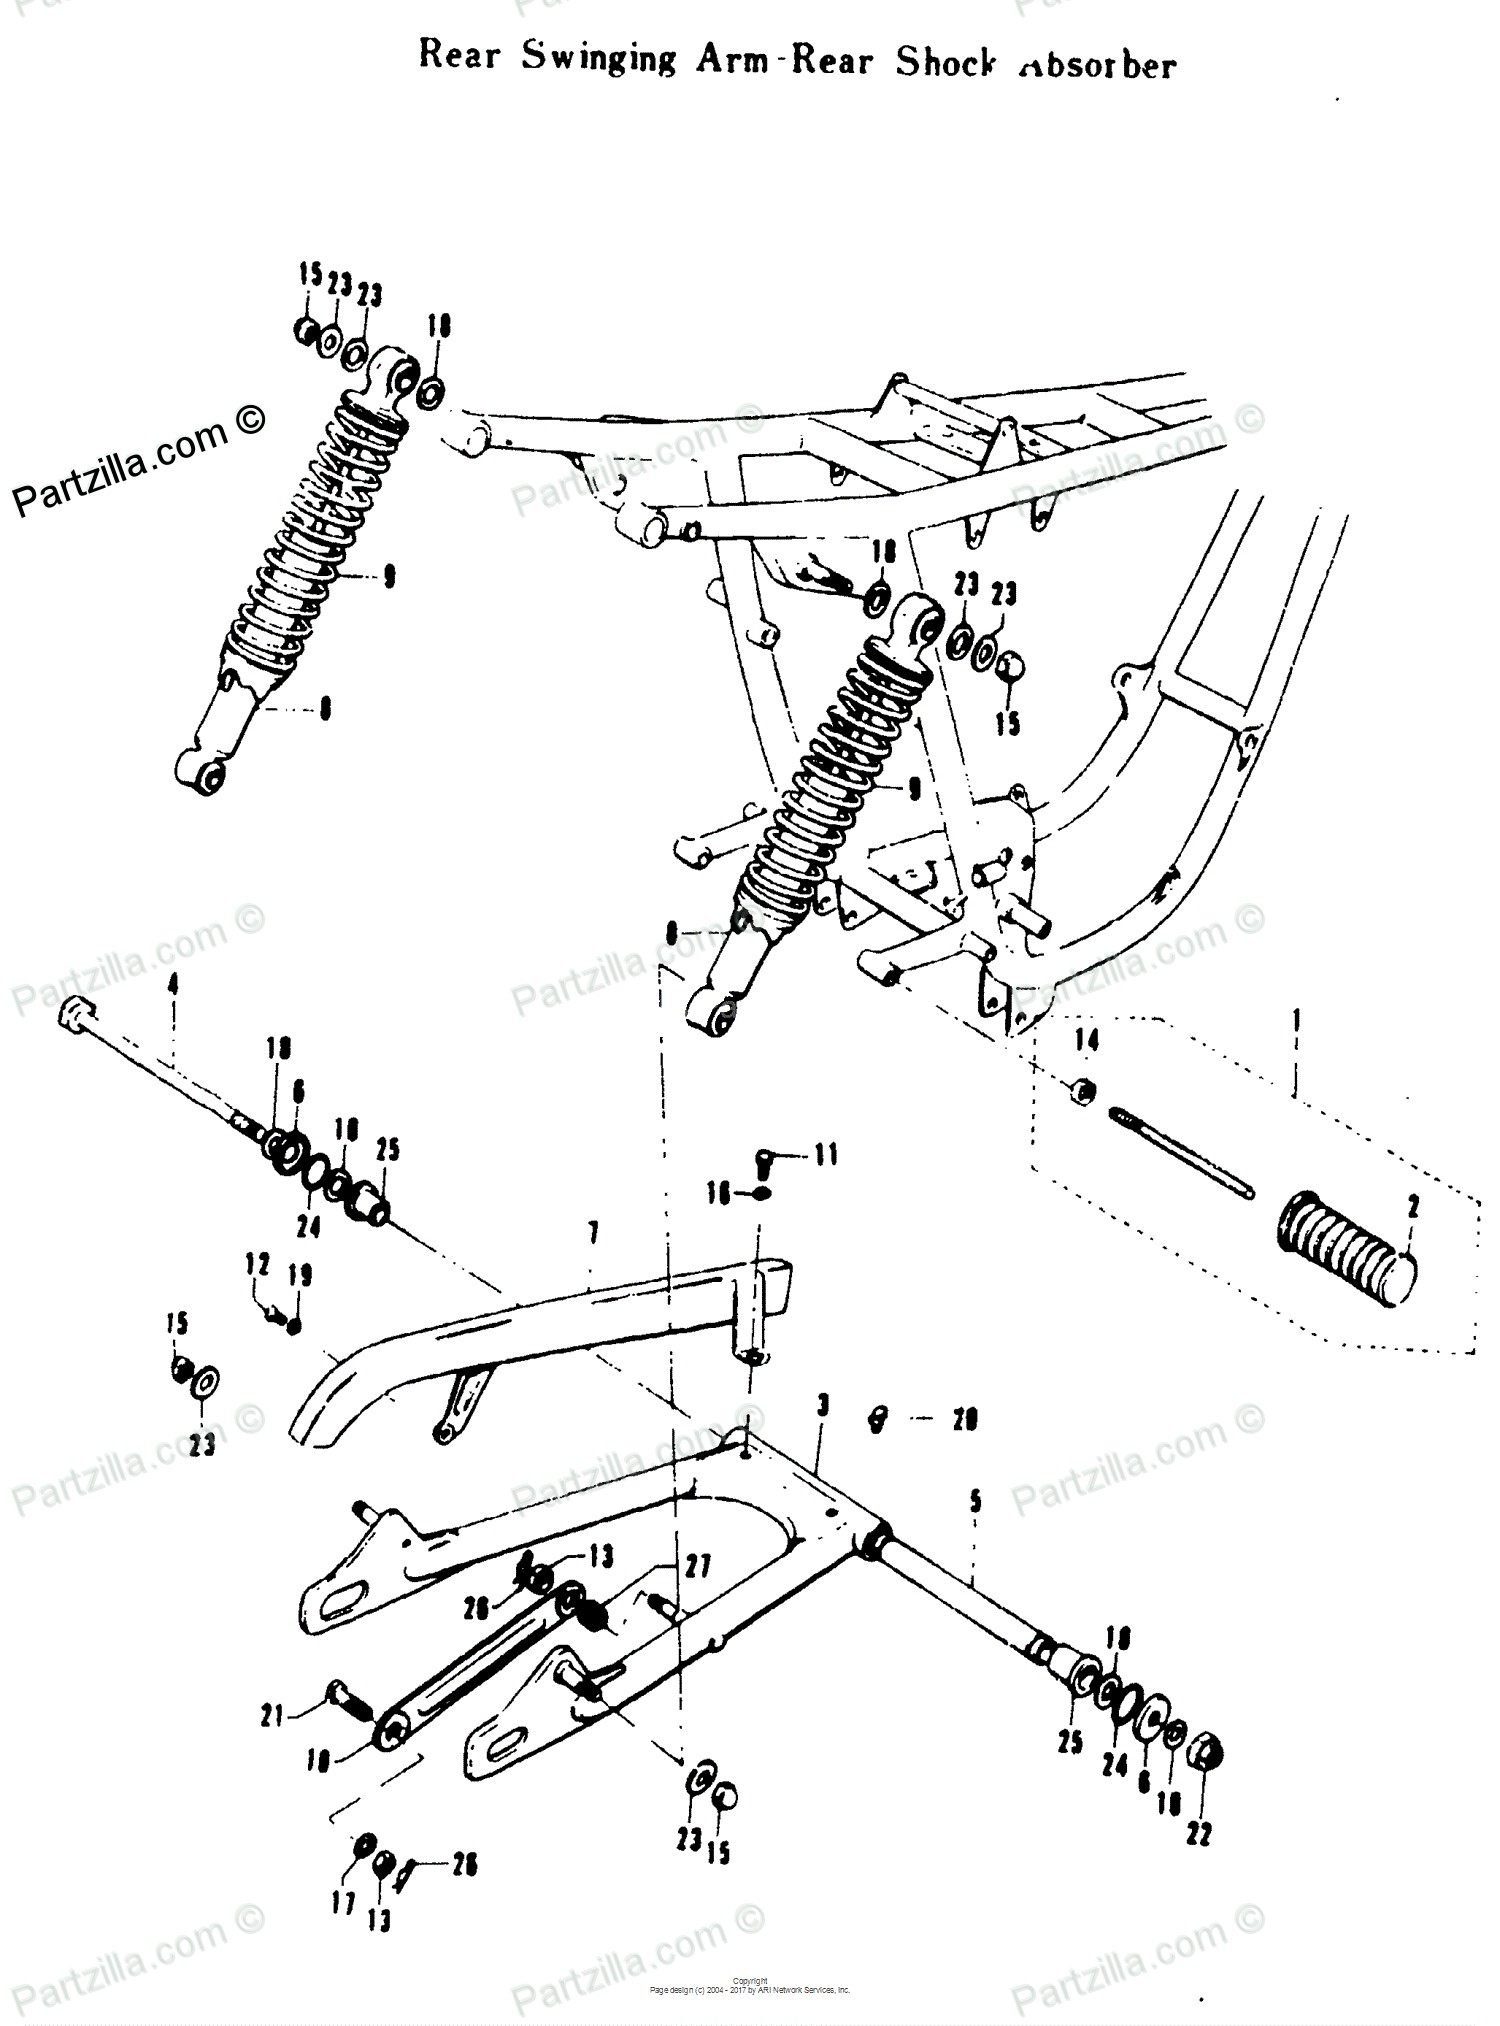 Car Shock Absorber Diagram Suzuki Motorcycle 1969 Oem Parts Diagram for Rear Swinging Arm Rear